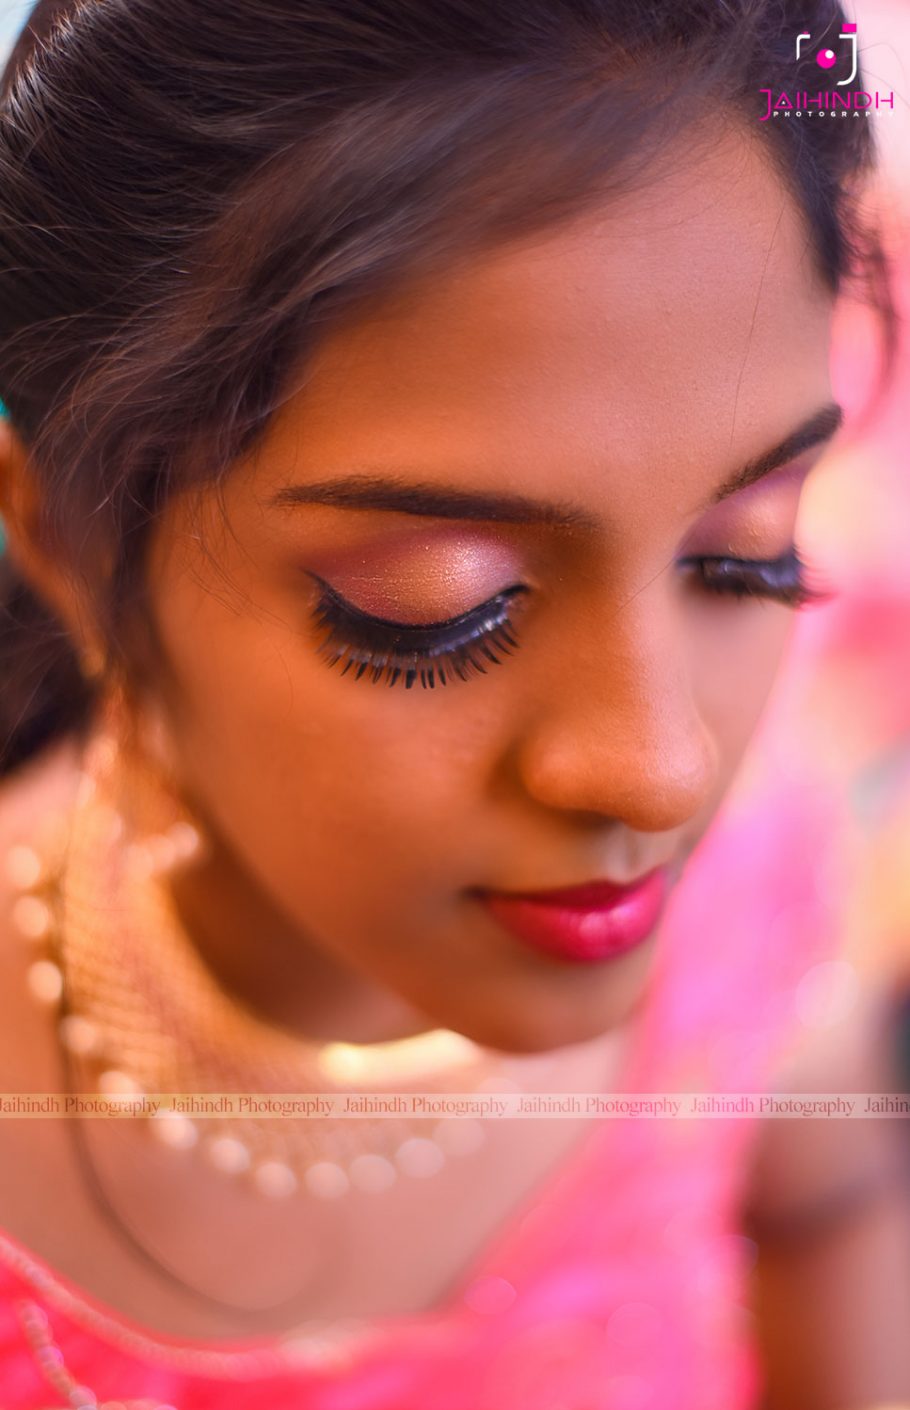 Best Beauty Parlours In Madurai Best Bridal Makeup In Madurai Bridal Artist In Madurai Bridal Makeup Artist In Madurai